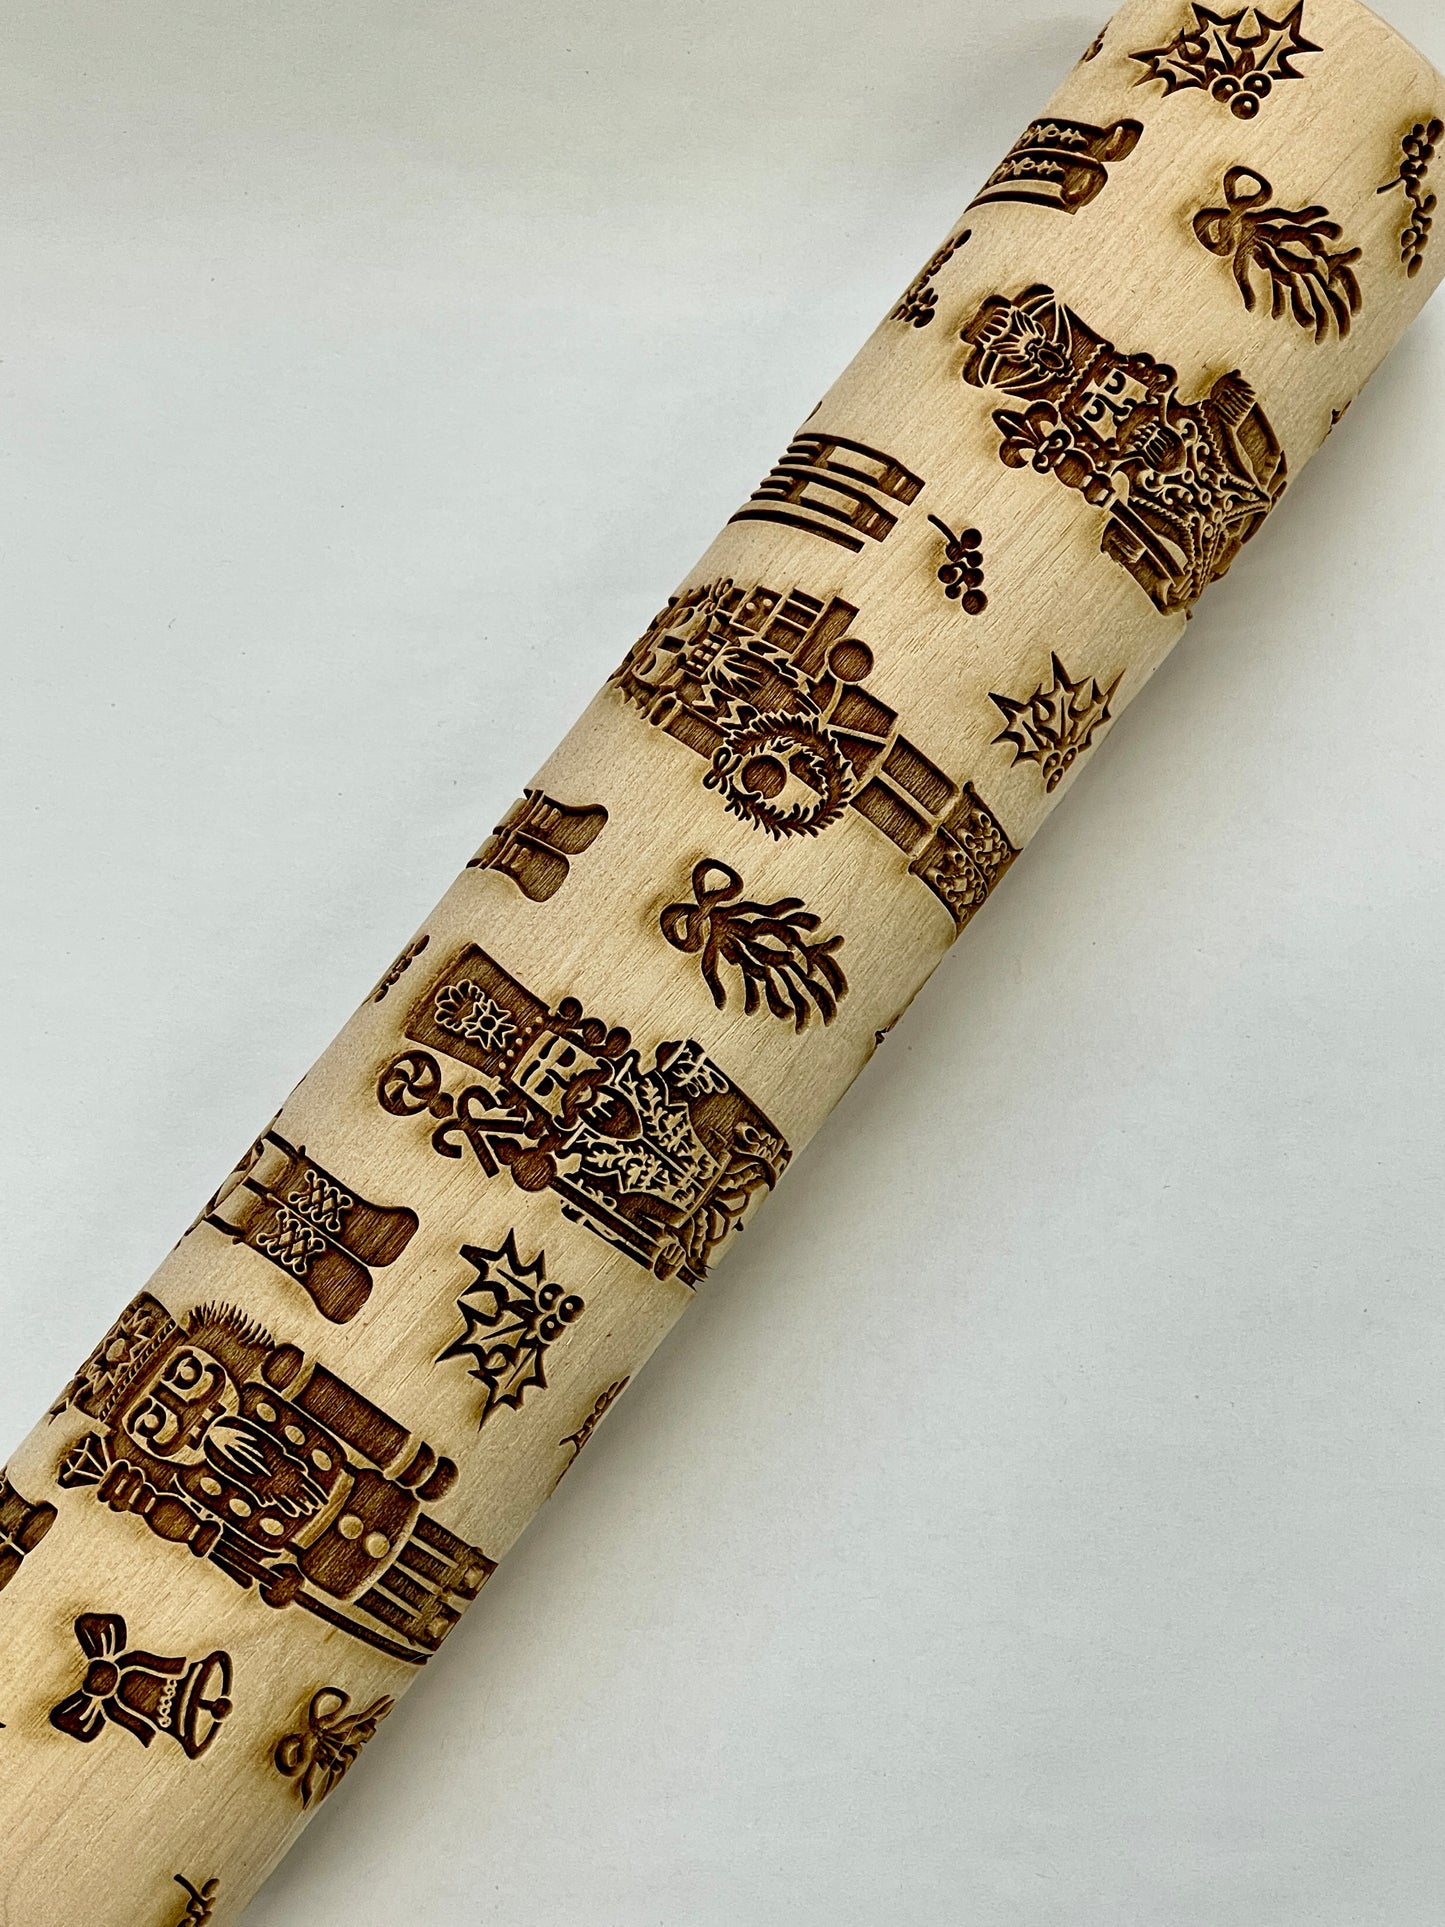 7"  Nutcracker Textured Rolling Pin